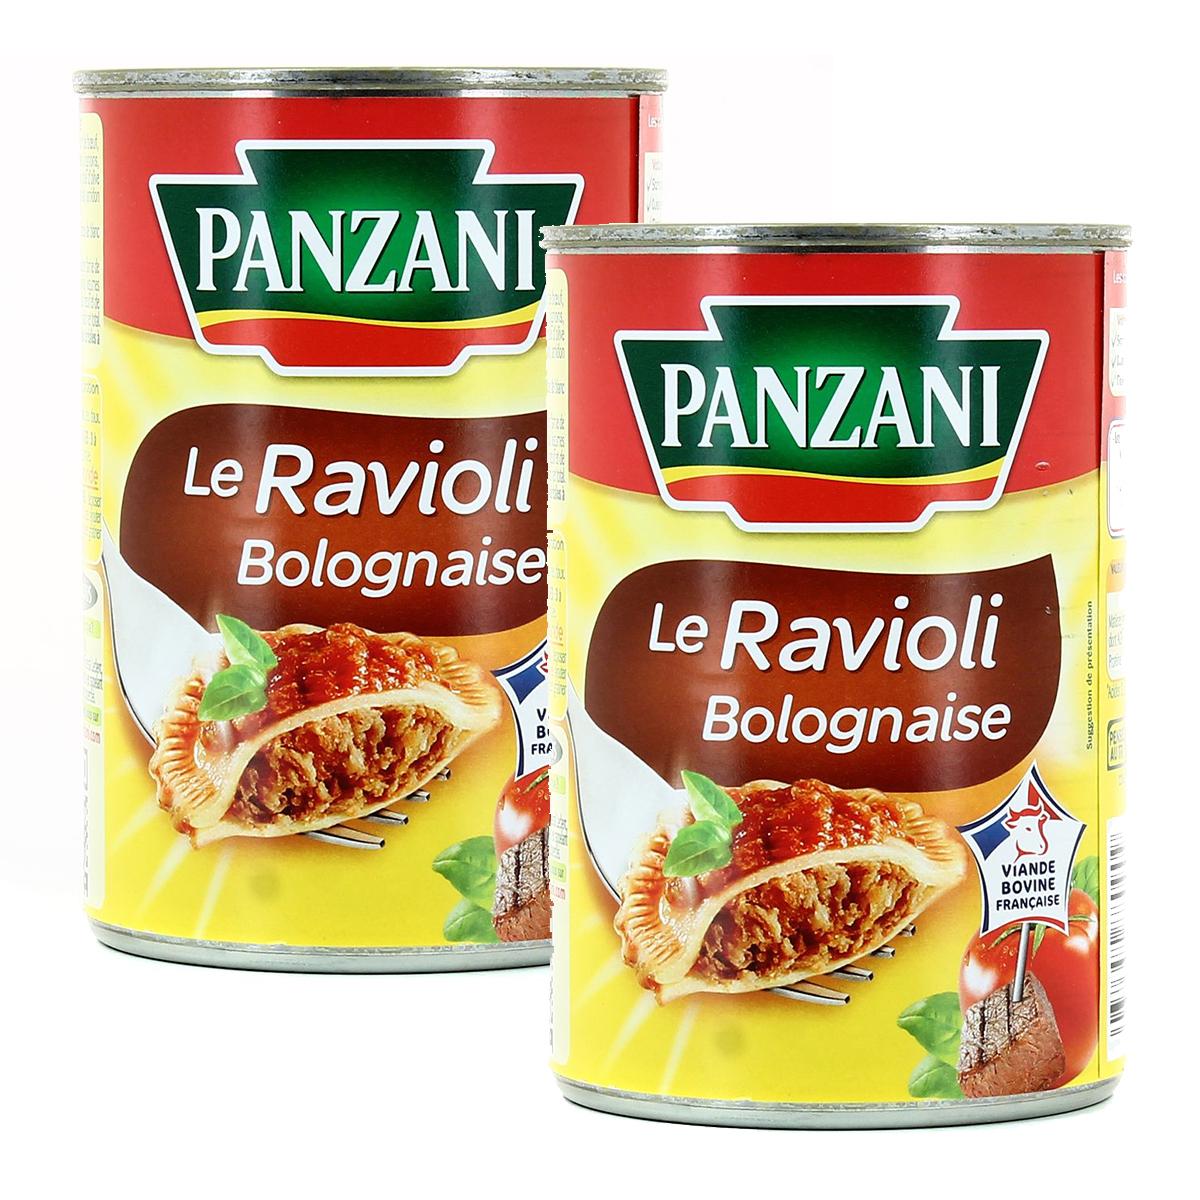 Ravioli pur boeuf - Les ravioli - Ravioli Panzani